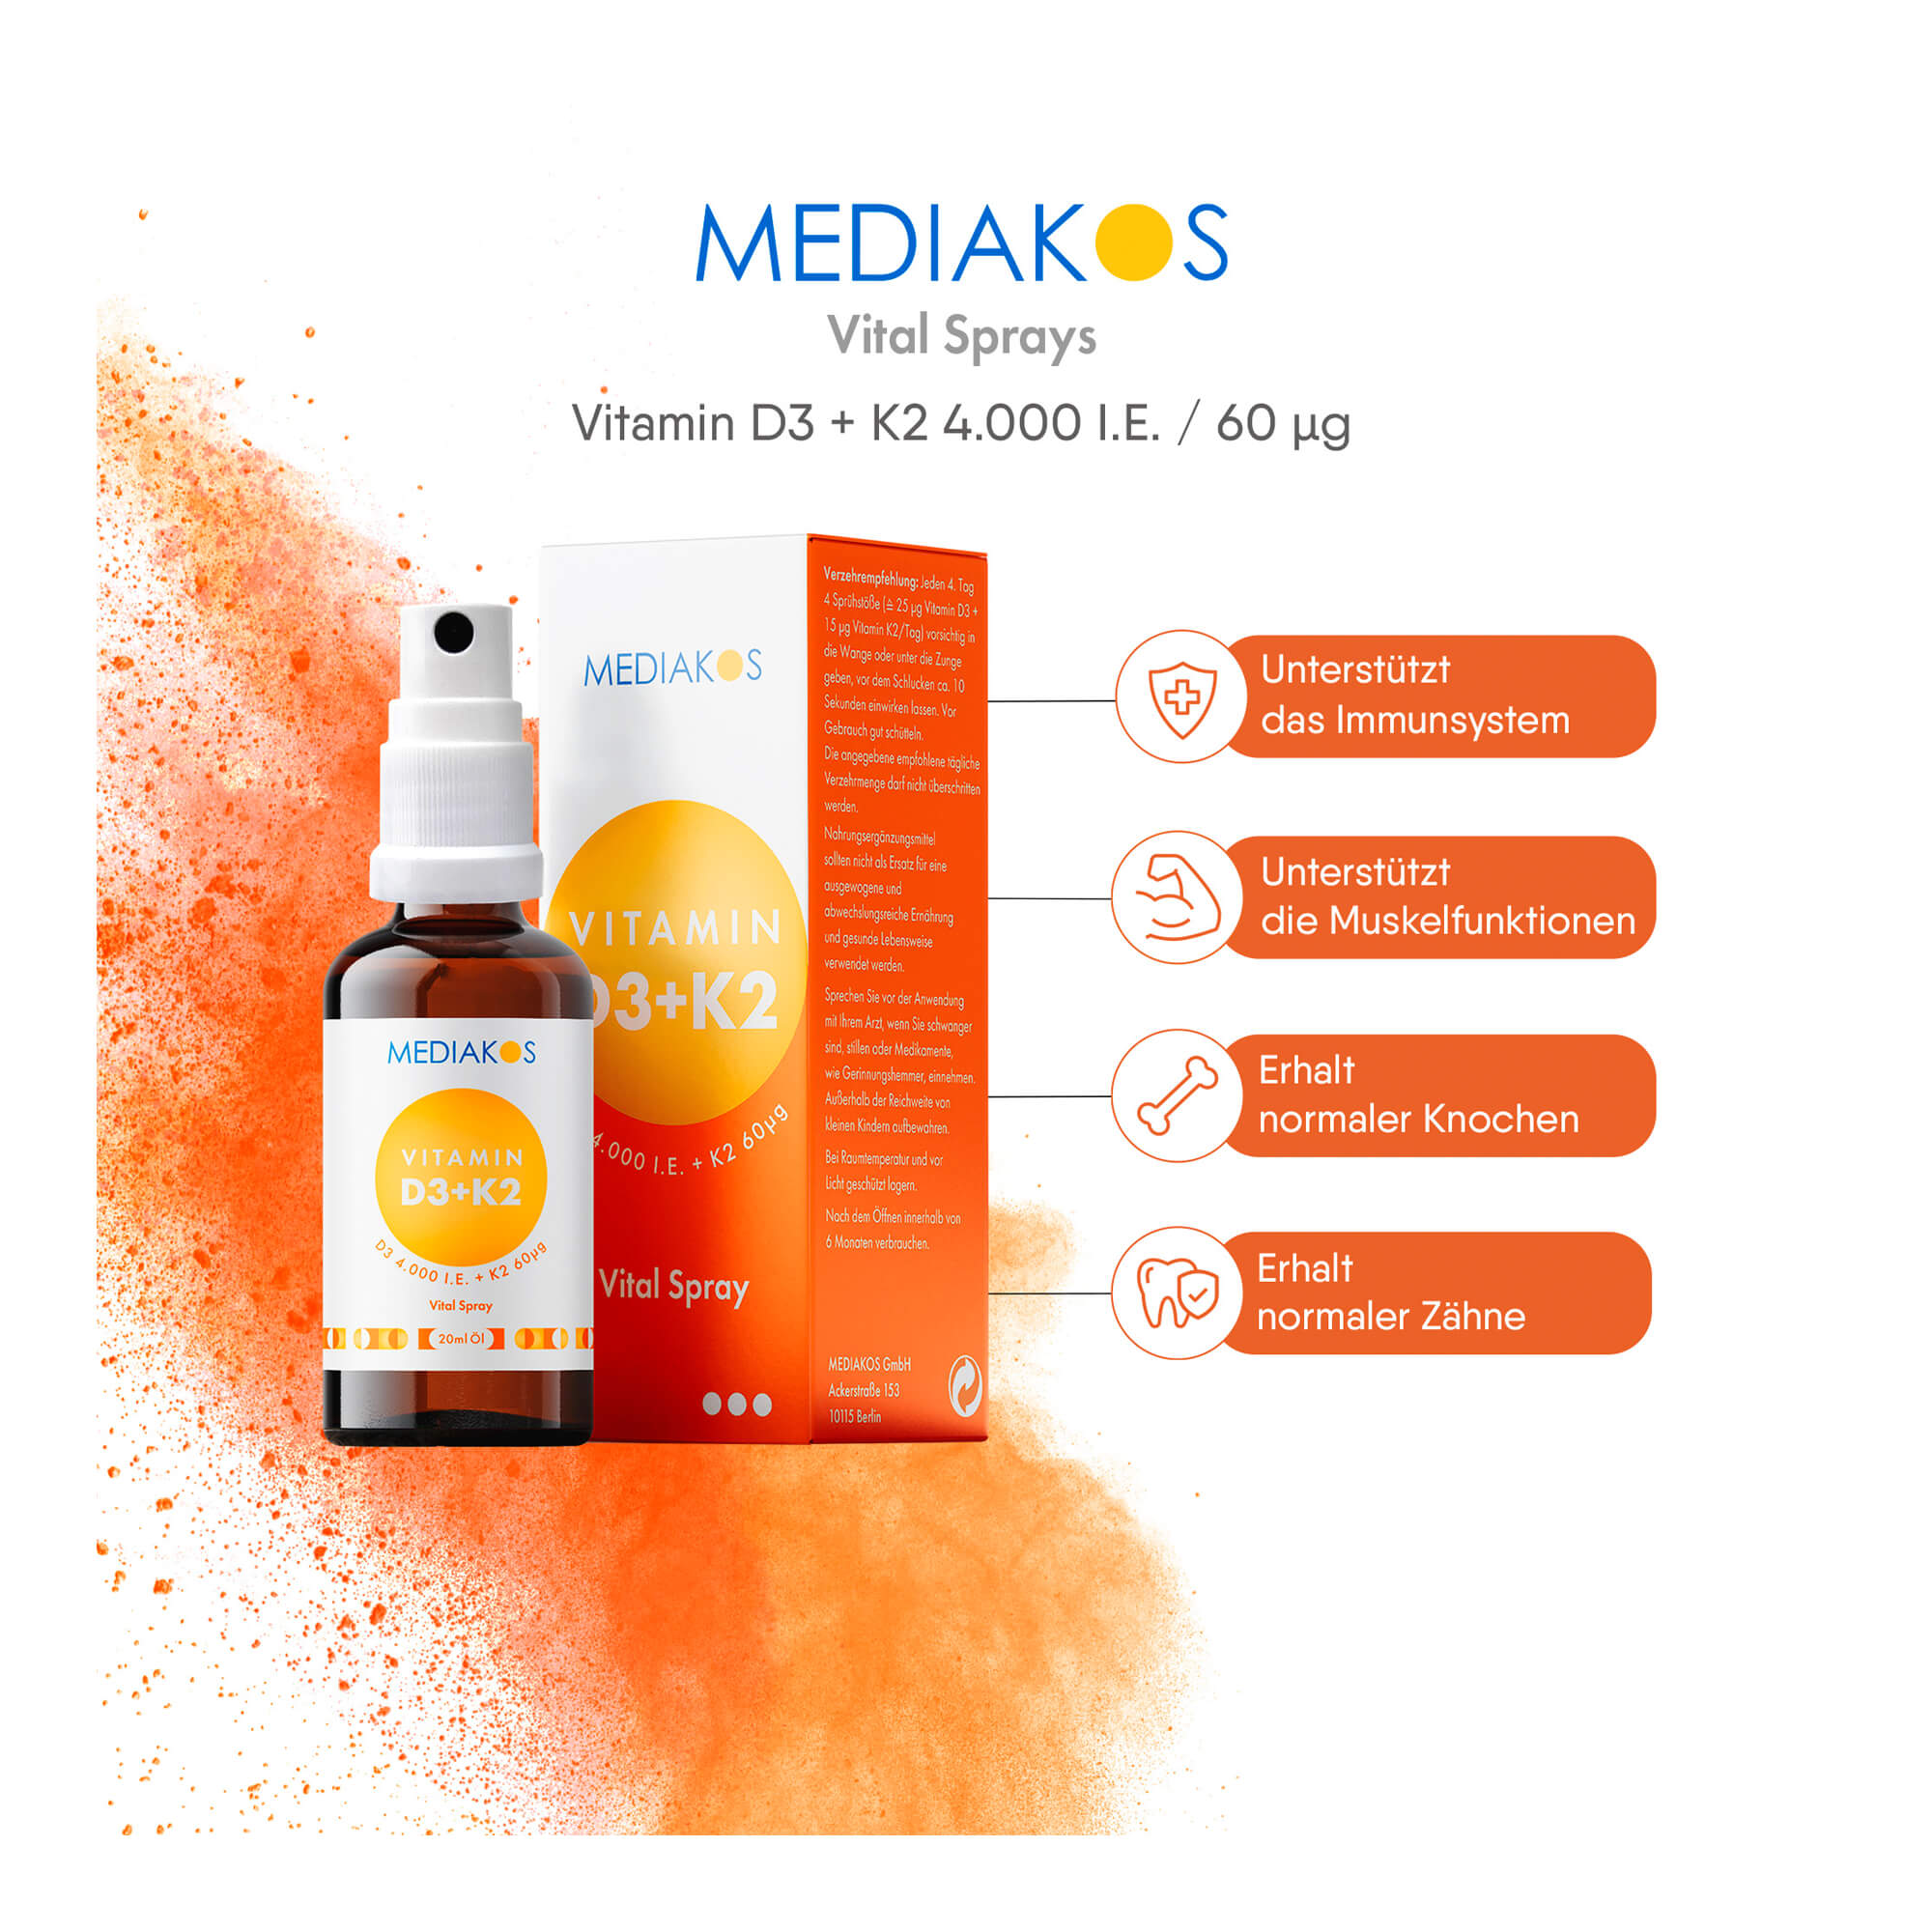 Mediakos Vitamin D3+K2 4.000 I.E. / 60 μg Vital Spray